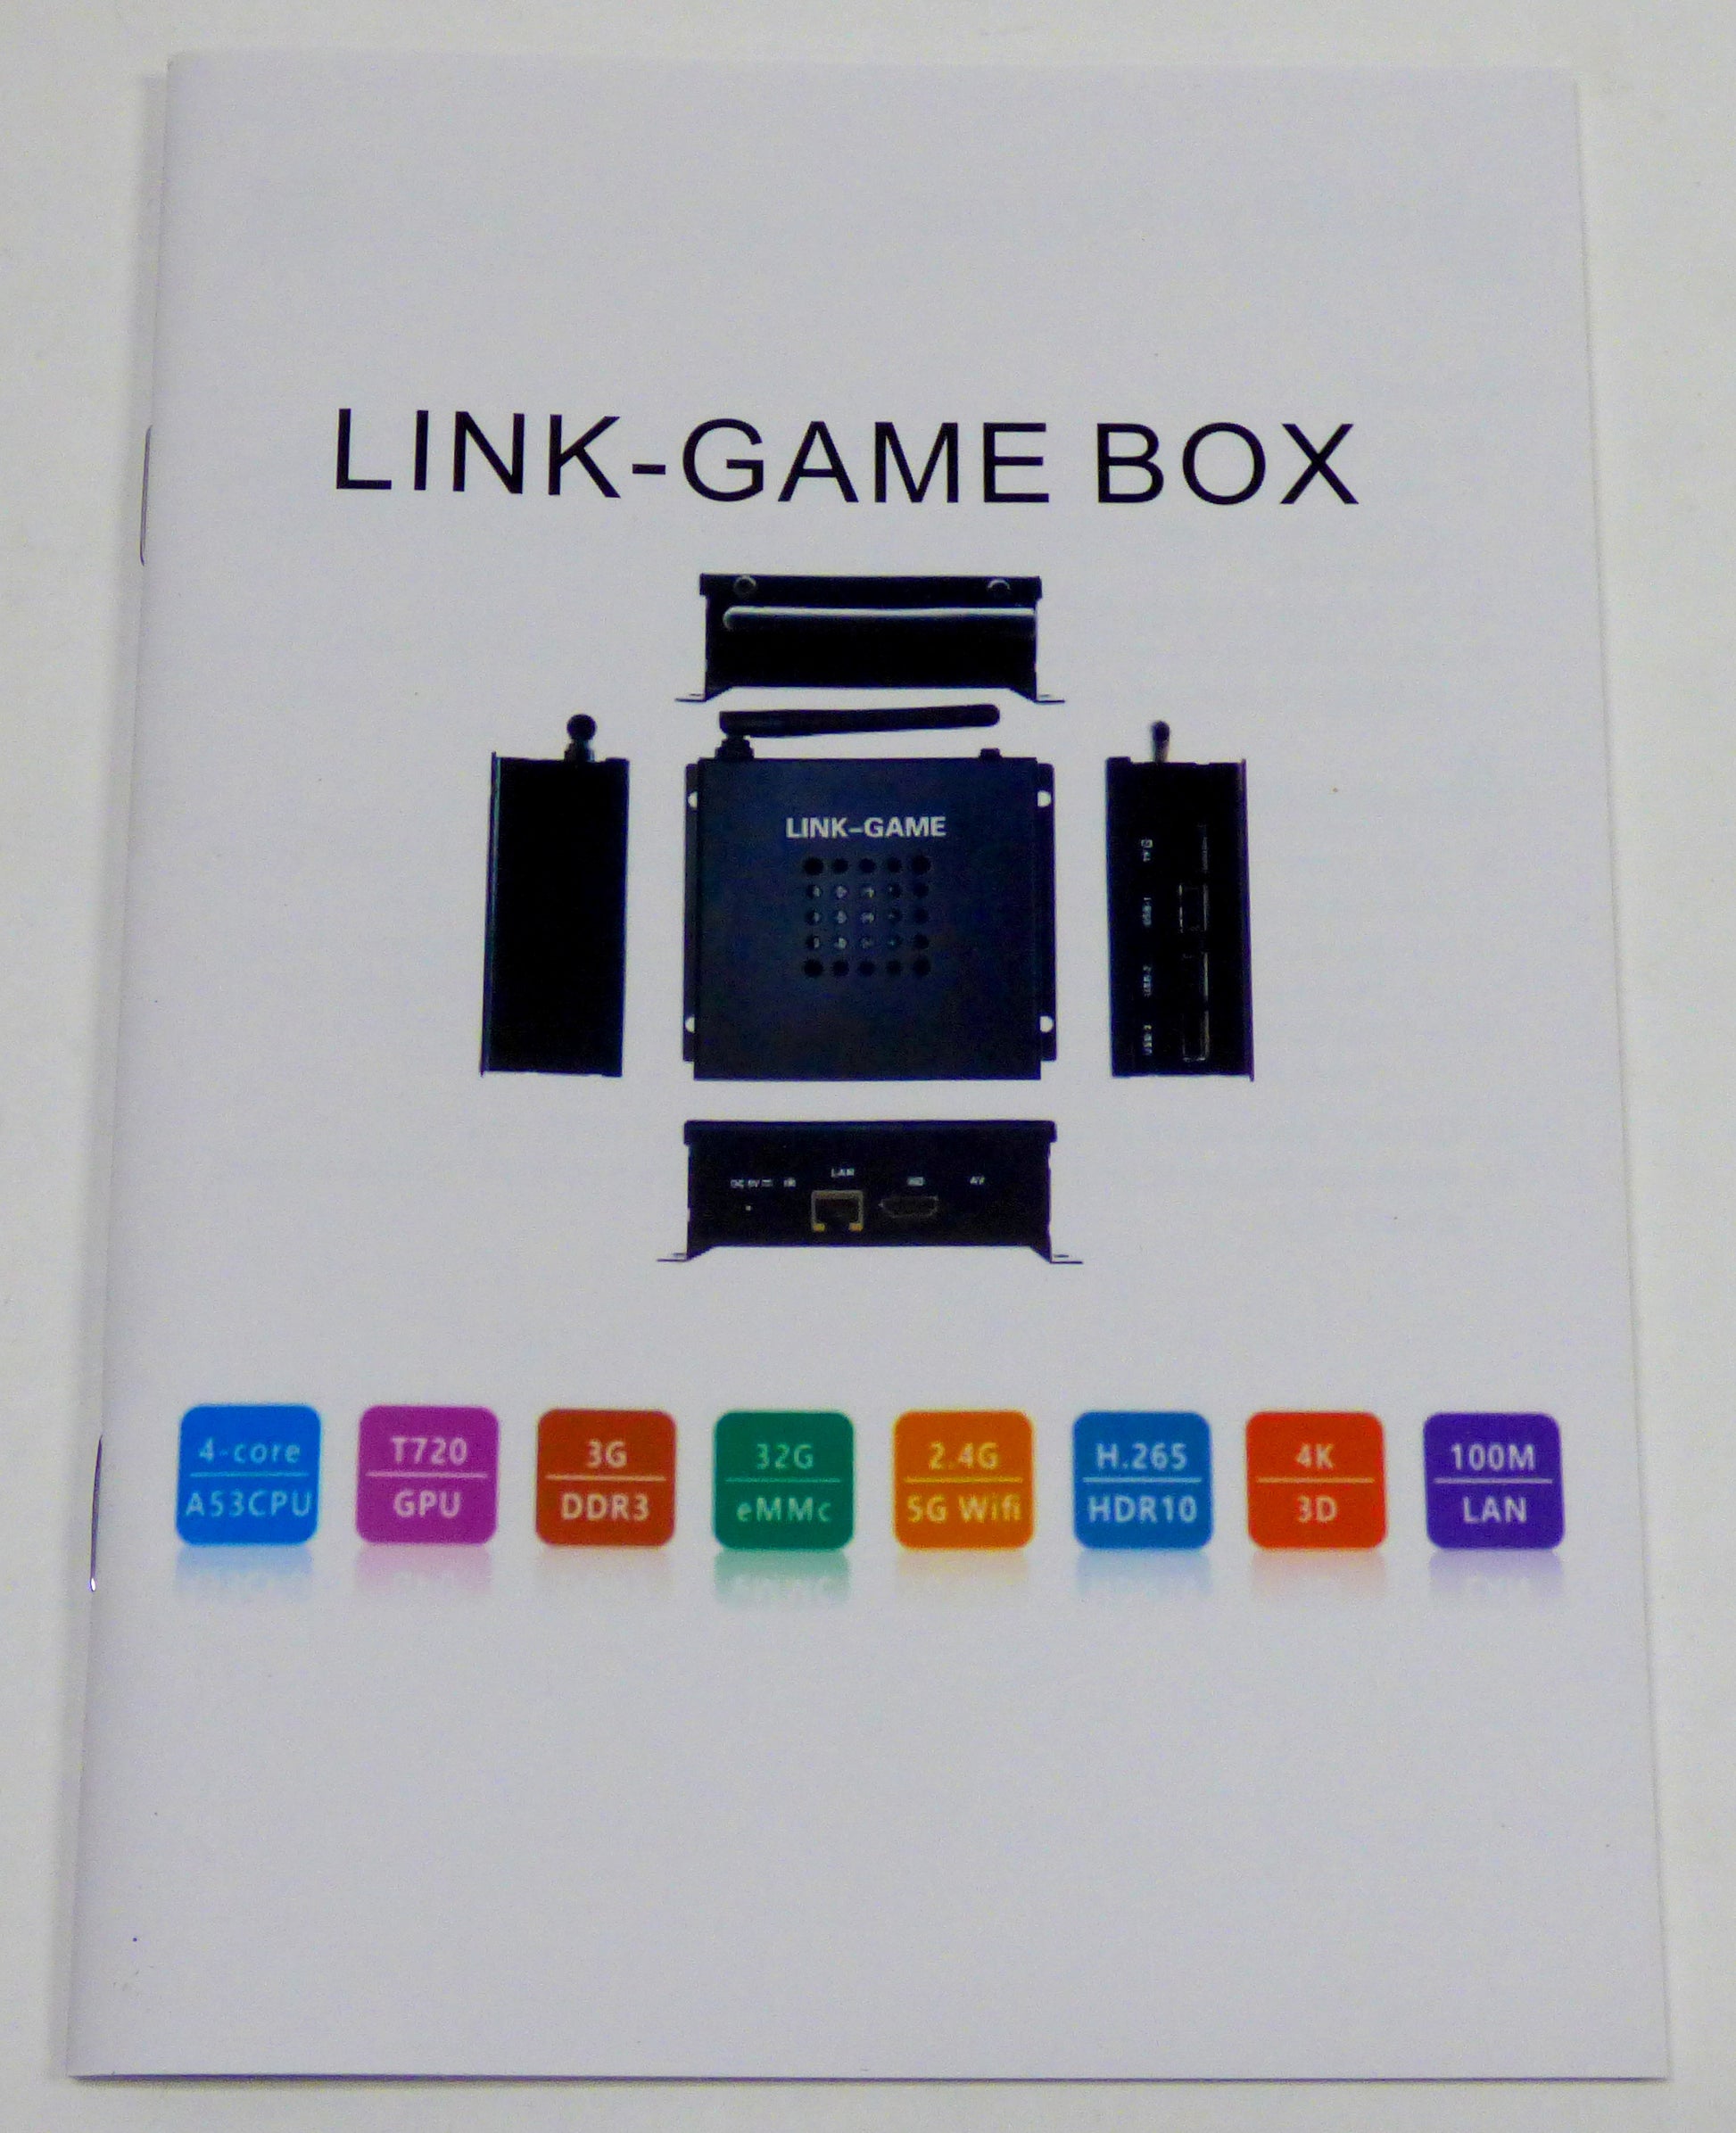 link-game video game box de-b1-1.0 owner's manual